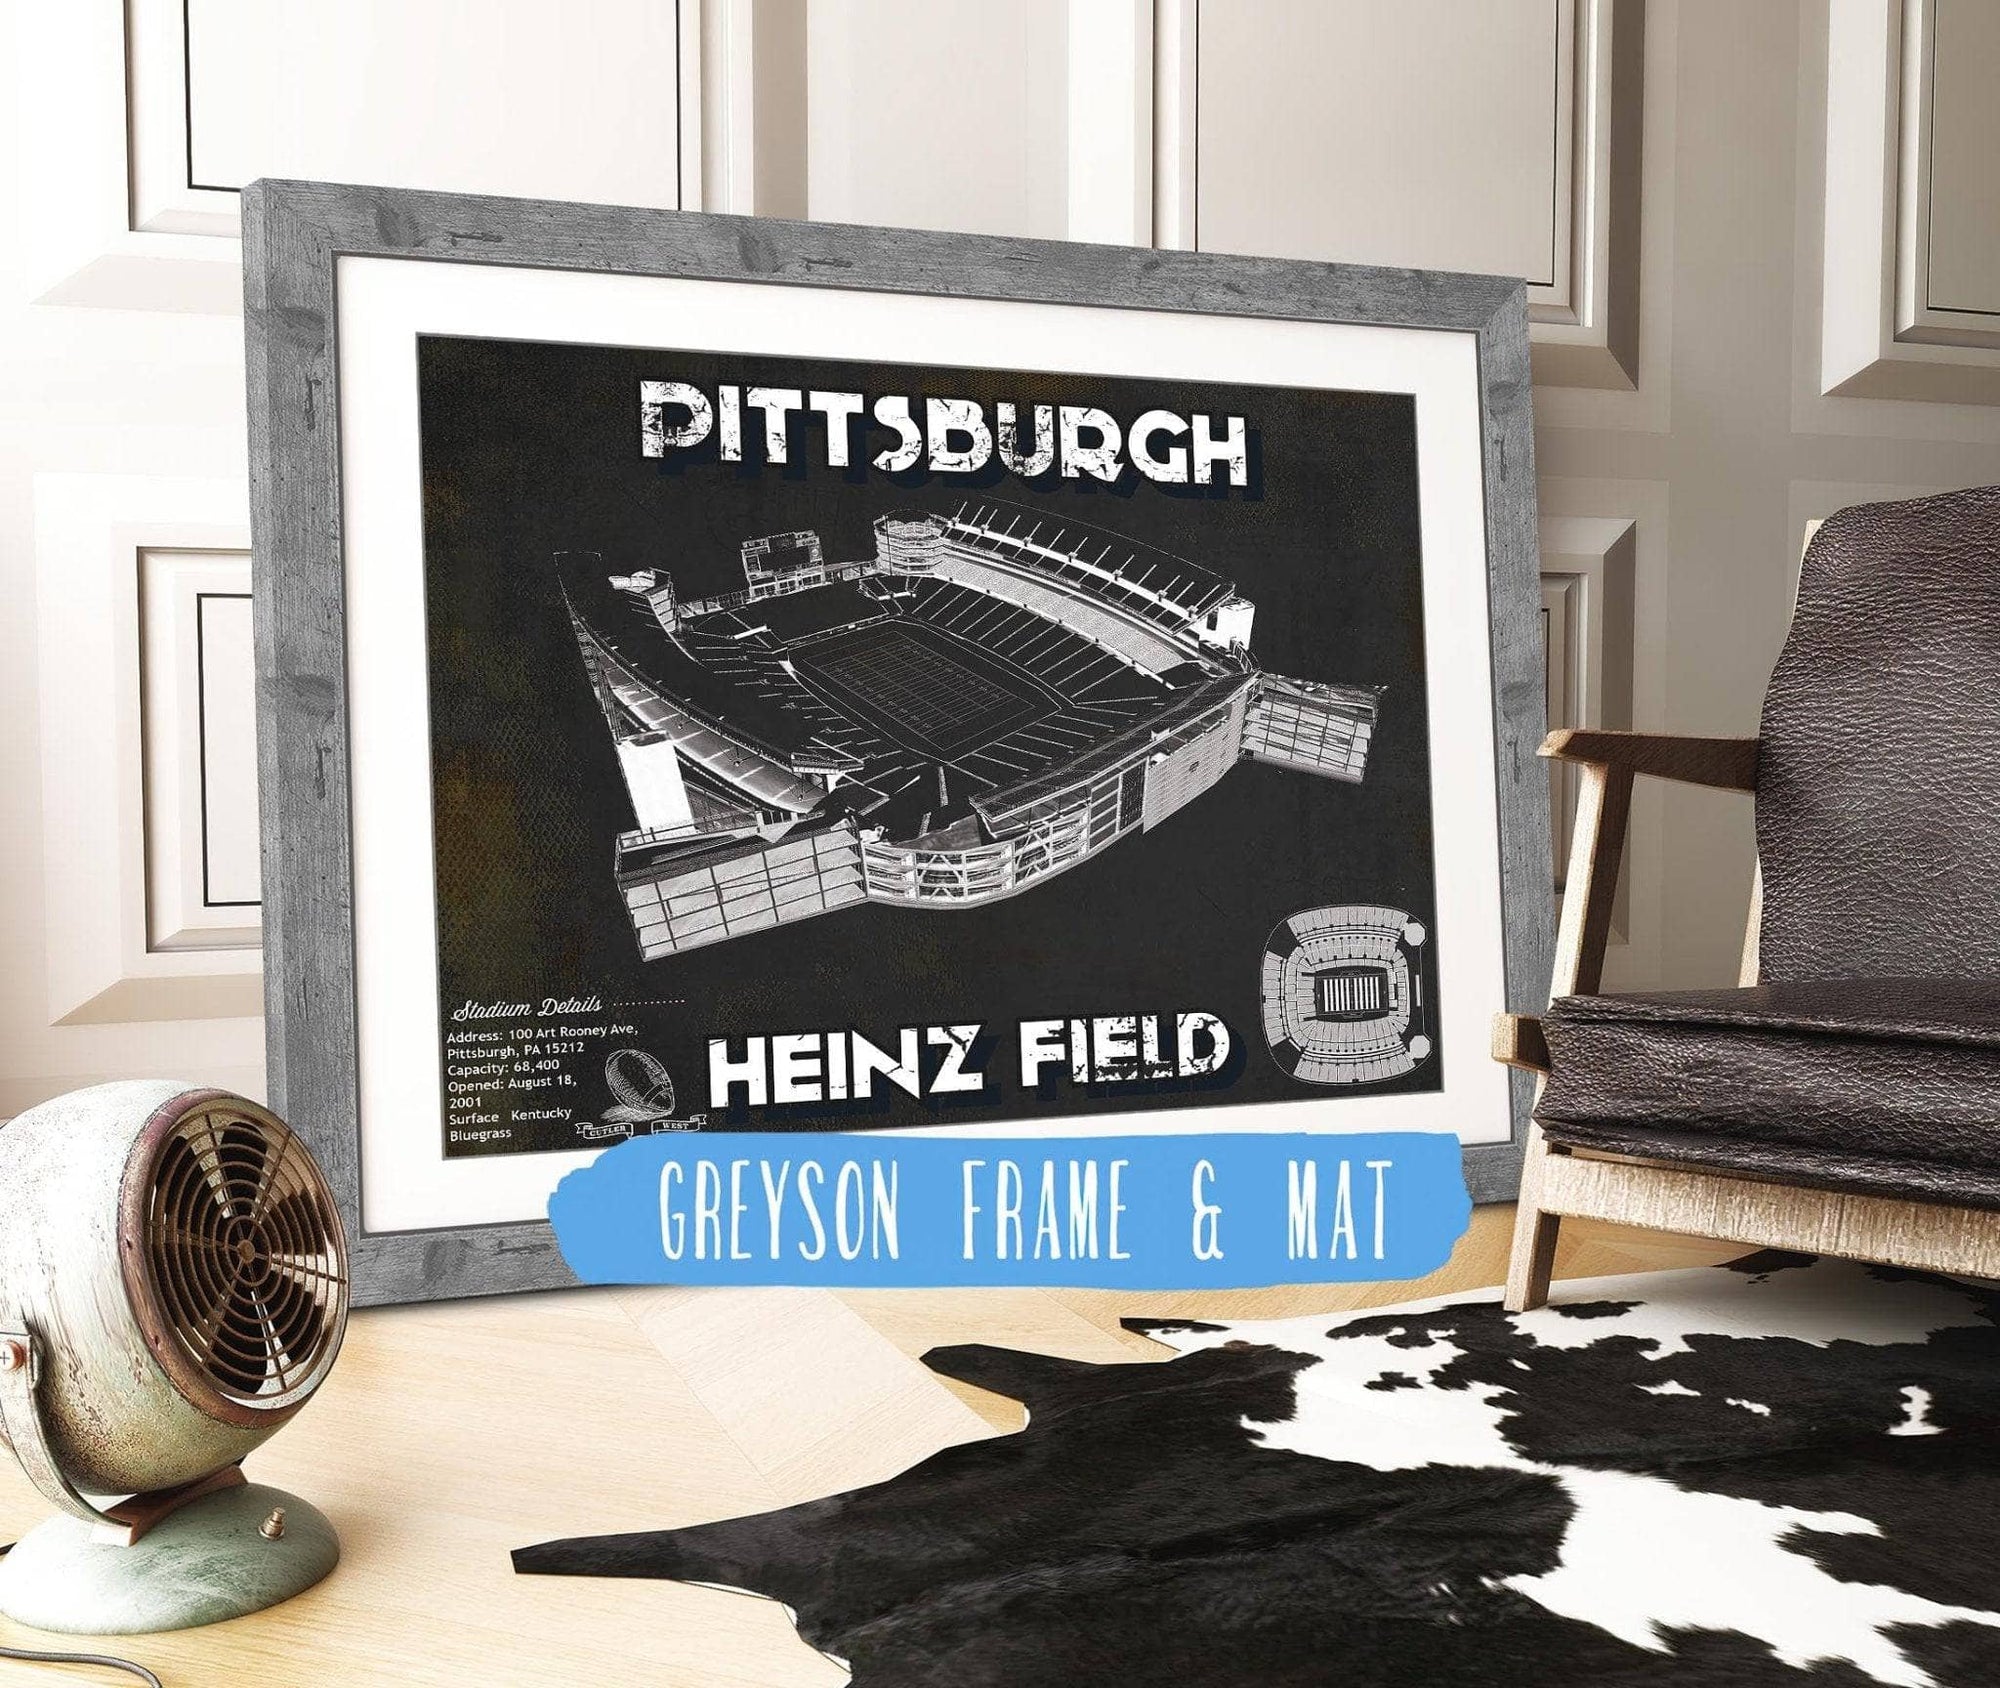 Cutler West Pro Football Collection 14" x 11" / Greyson Frame & Mat Pittsburgh Steelers Stadium Art Team Color- Heinz Field - Vintage Football Print 235353076